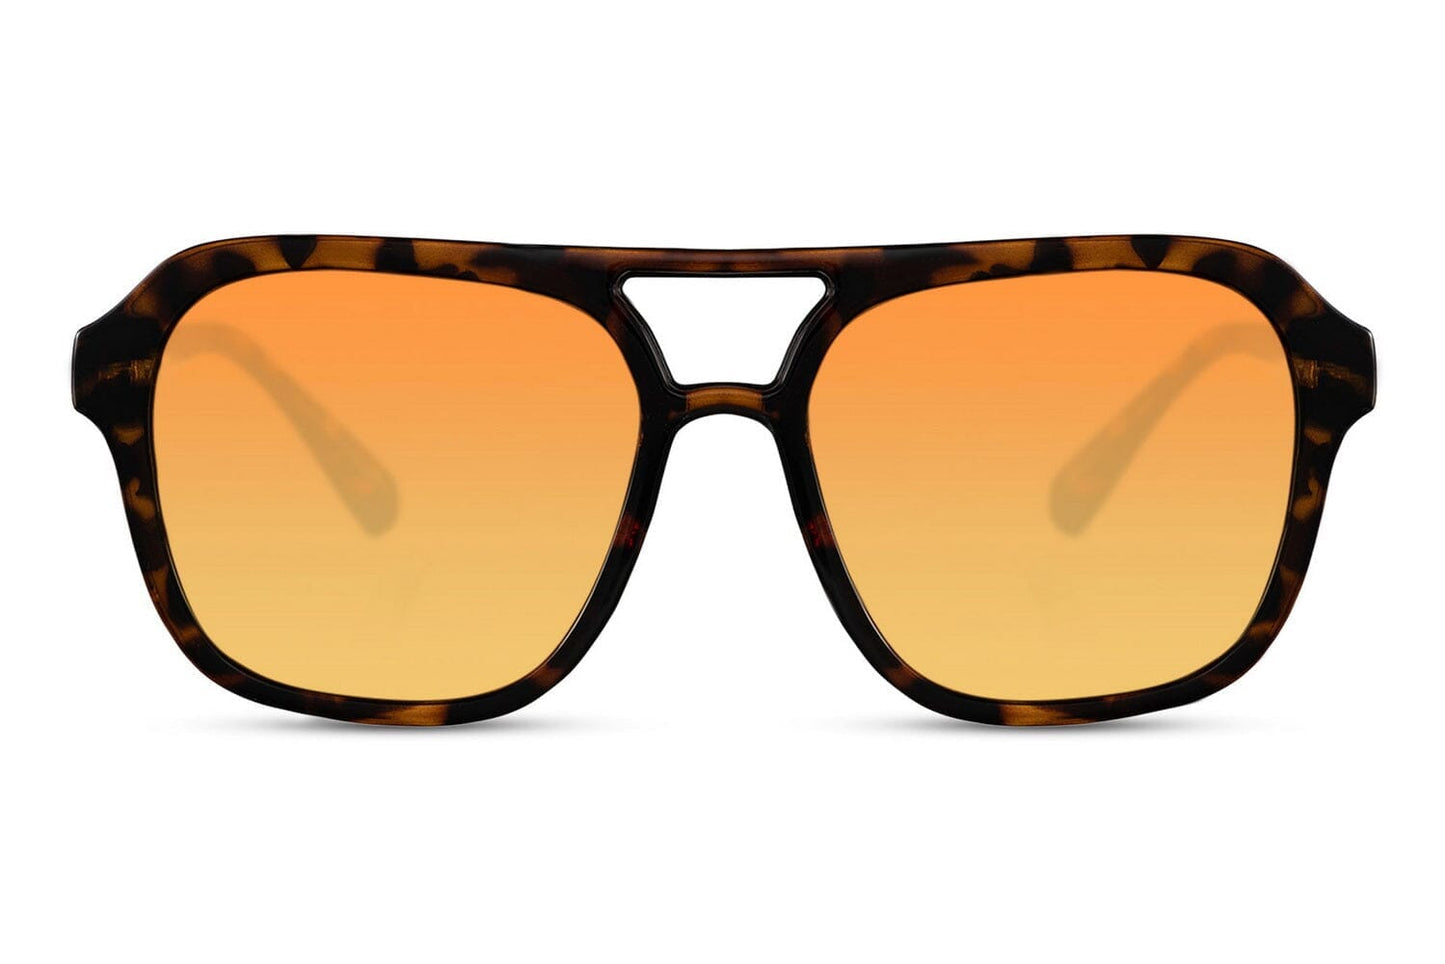 70's style aviator sunglasses. !00% UV protected. Orange lenses. Retro style.